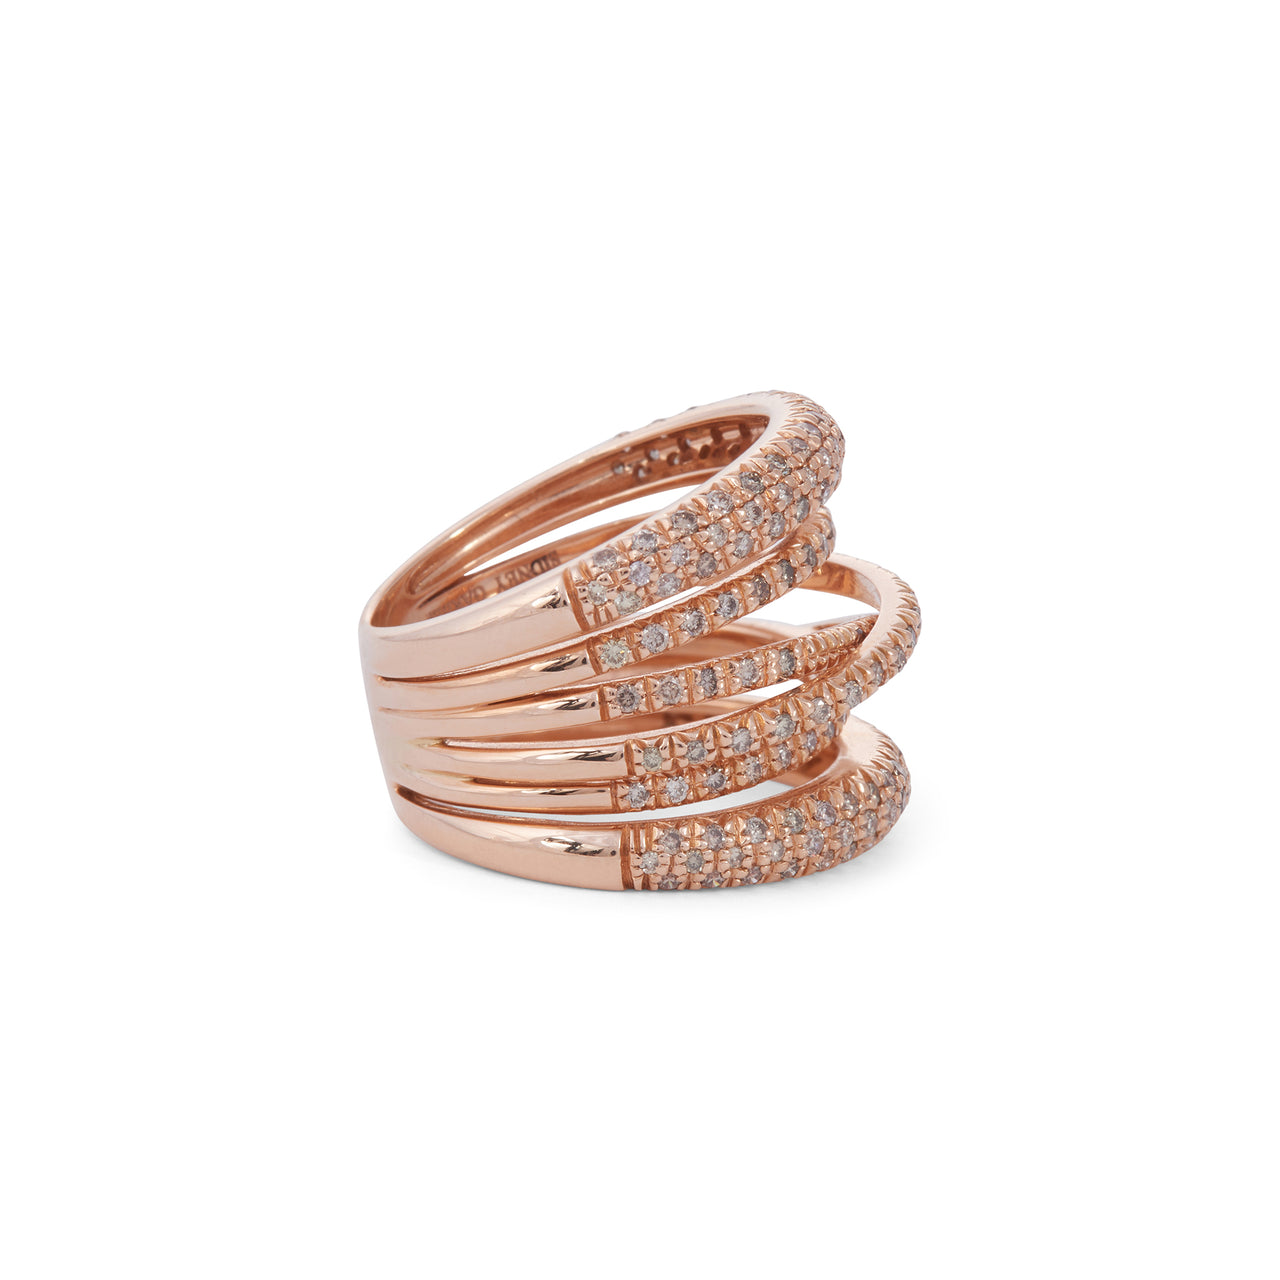 Scribble Ring with Cognac Diamonds